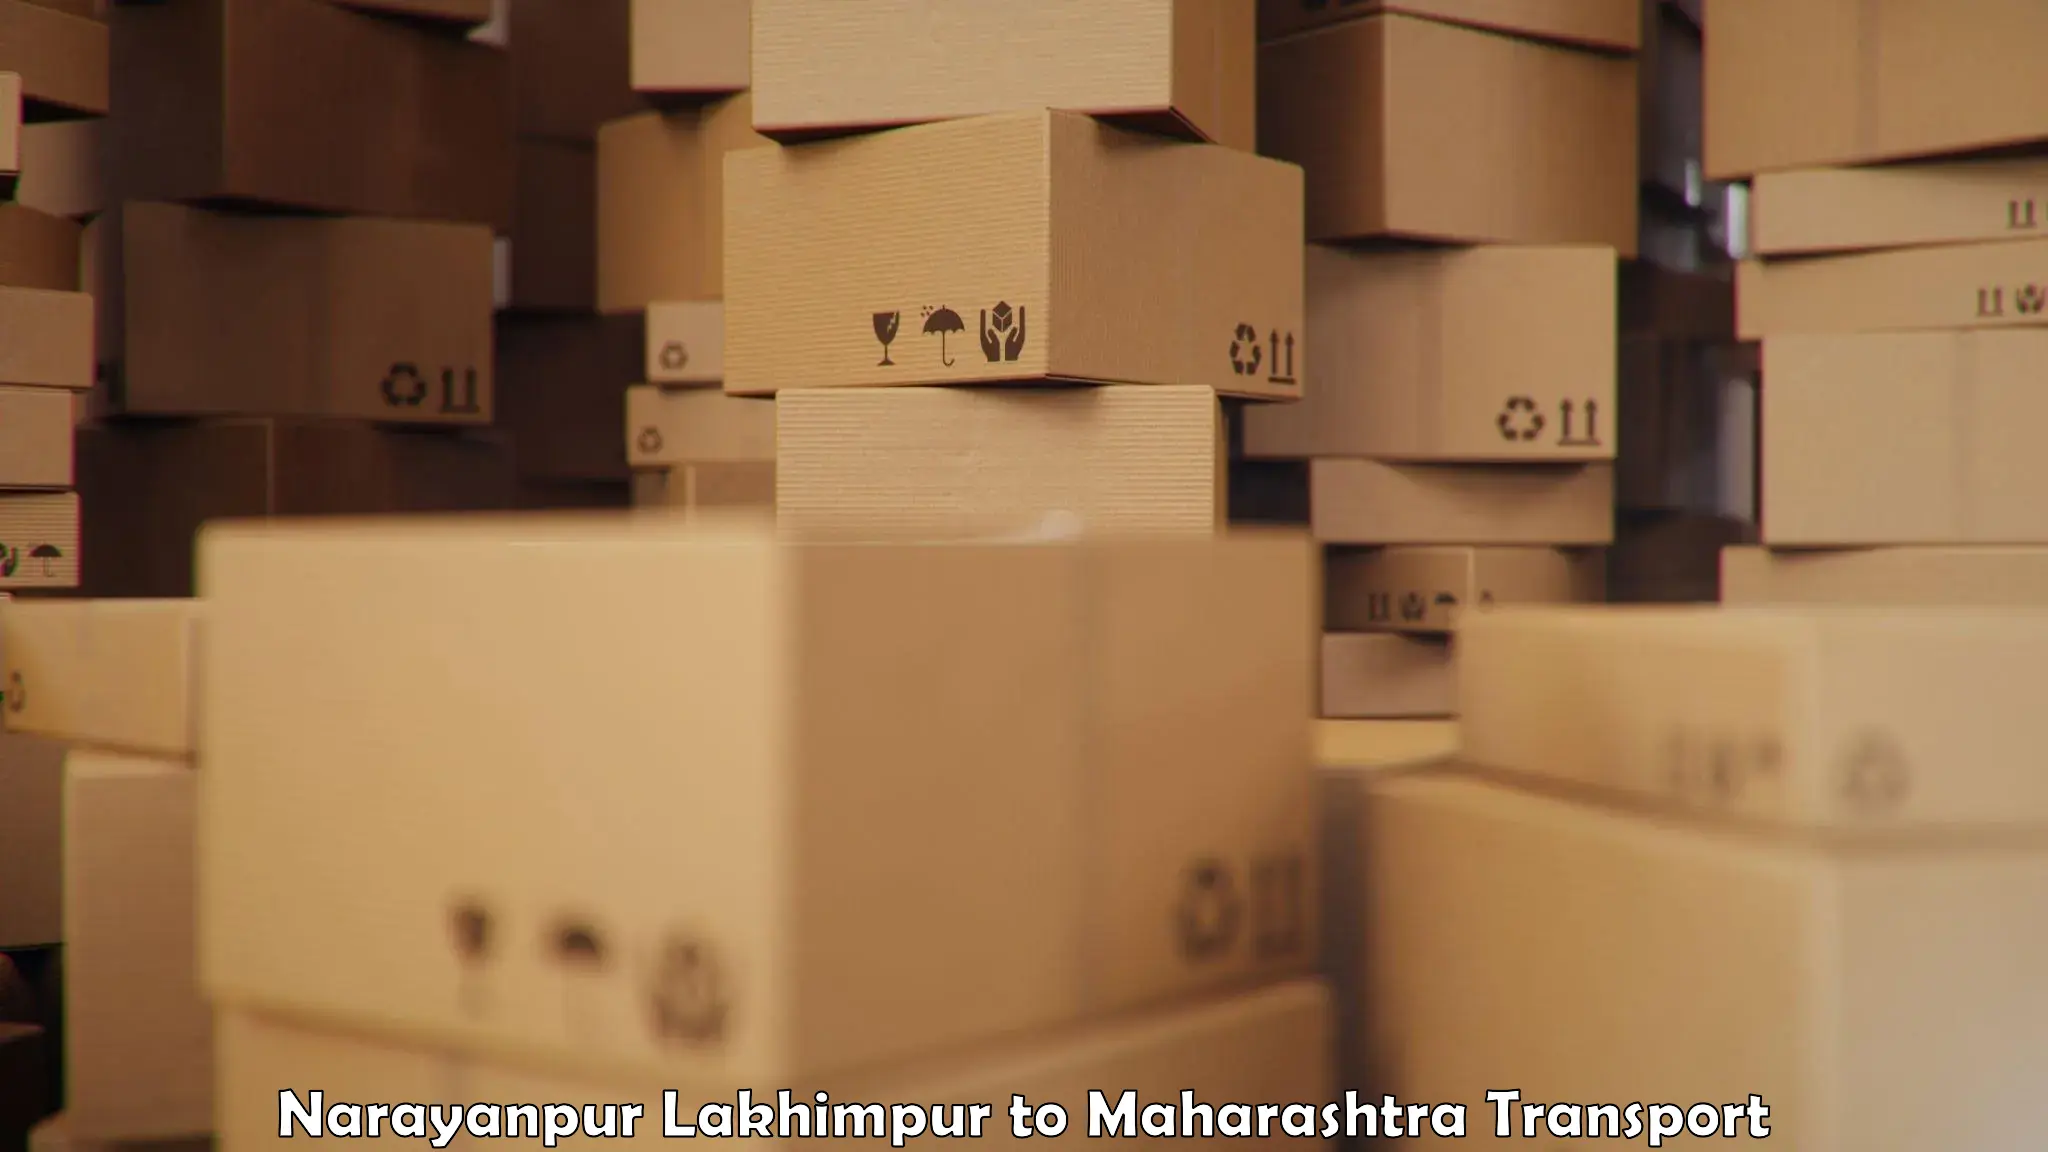 Shipping partner Narayanpur Lakhimpur to Nilanga